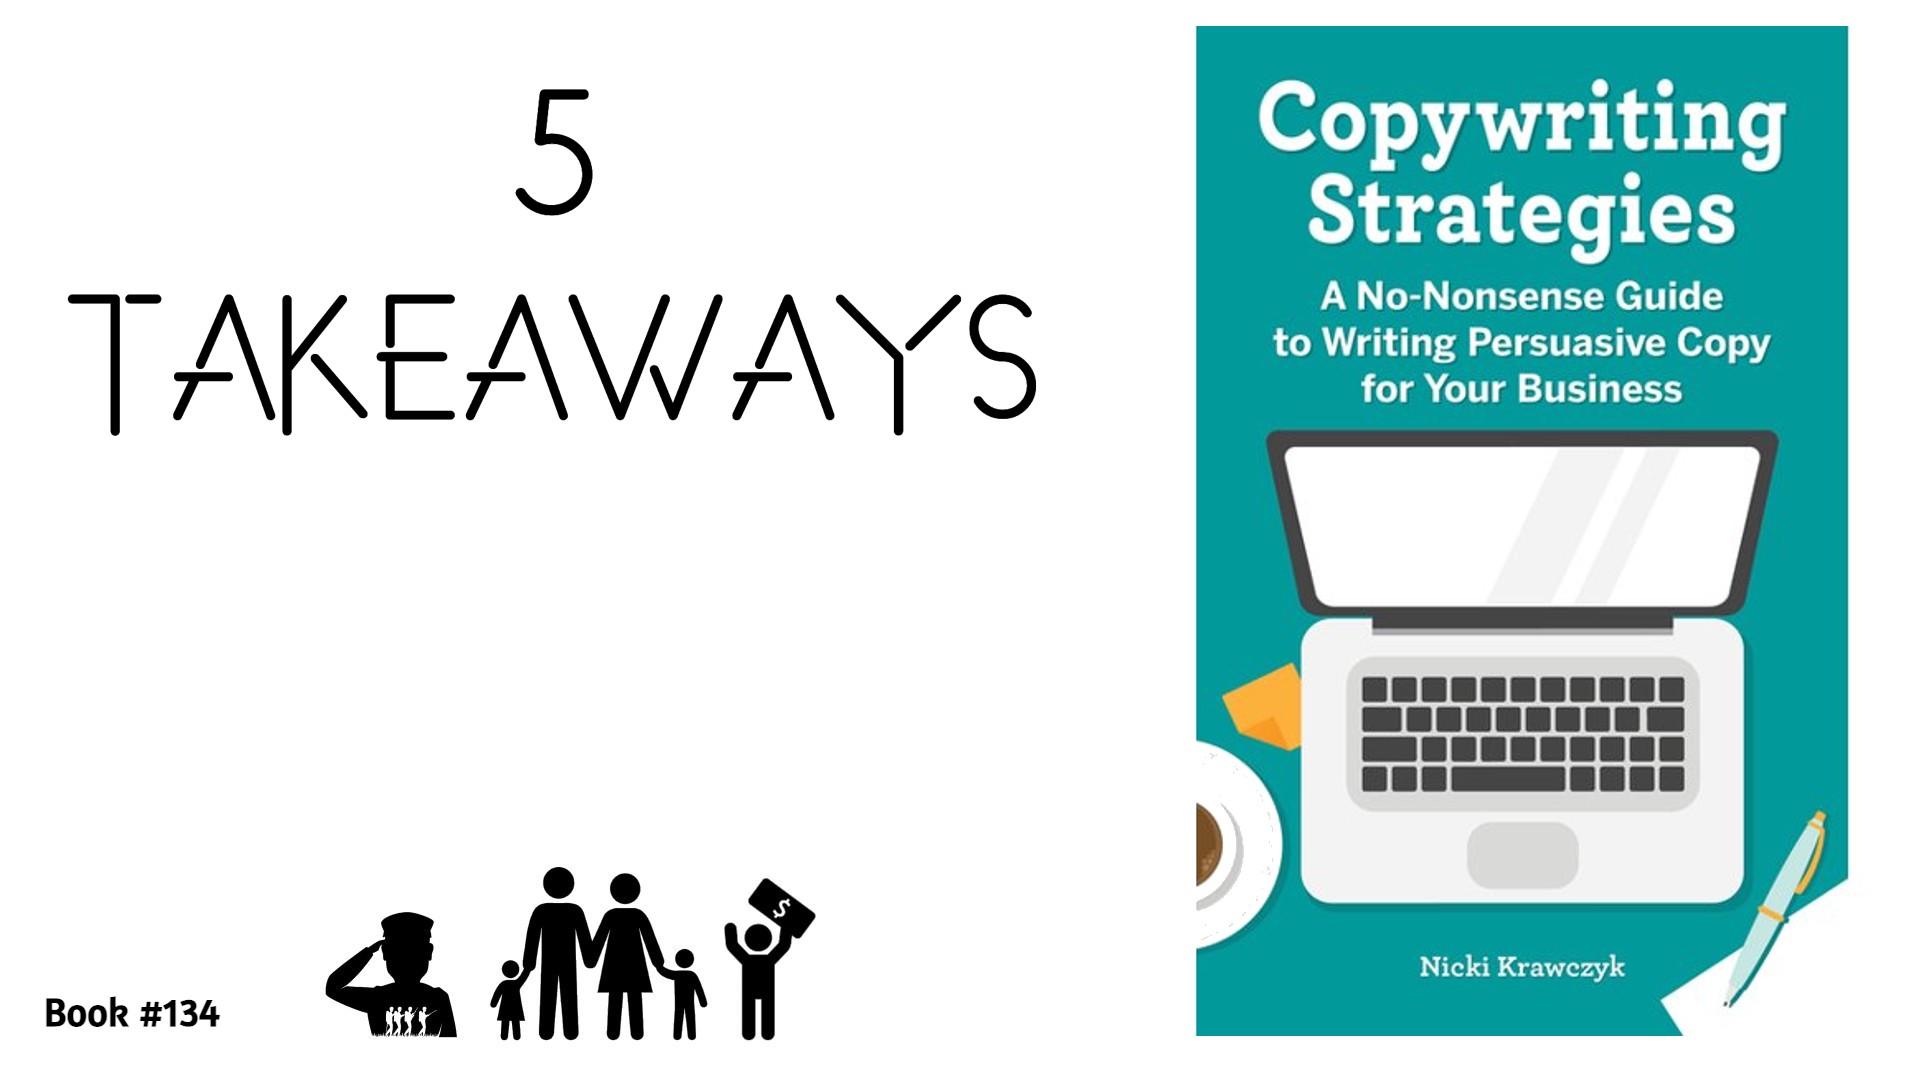 5 Takeaways from “Copywriting Strategies”